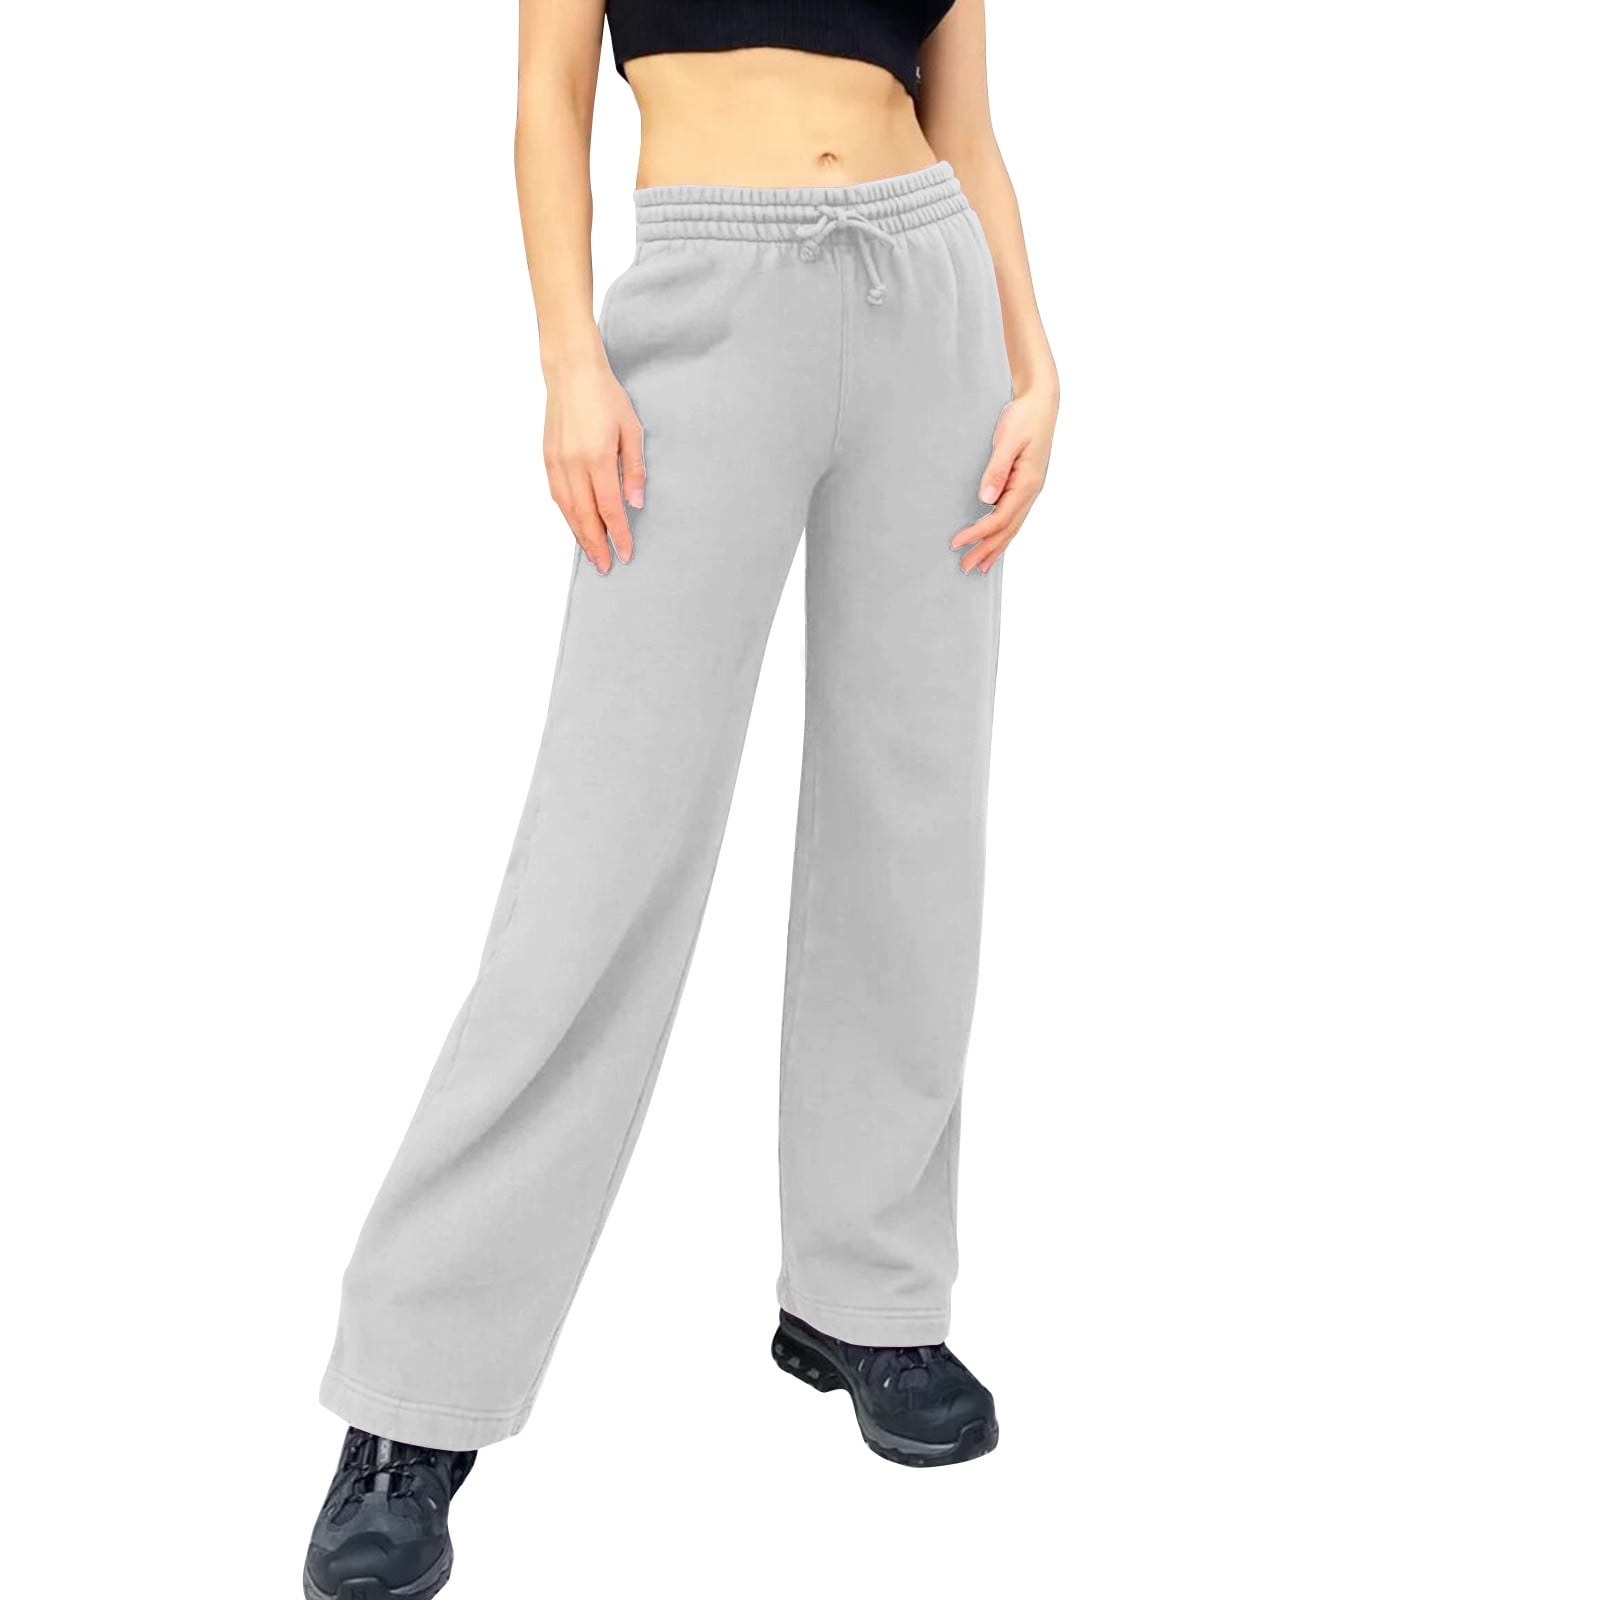 Lueluoye Wide Leg Sweatpants for Women Casual Loose Comfy Drawstring Lounge  Long Pants S-2XL